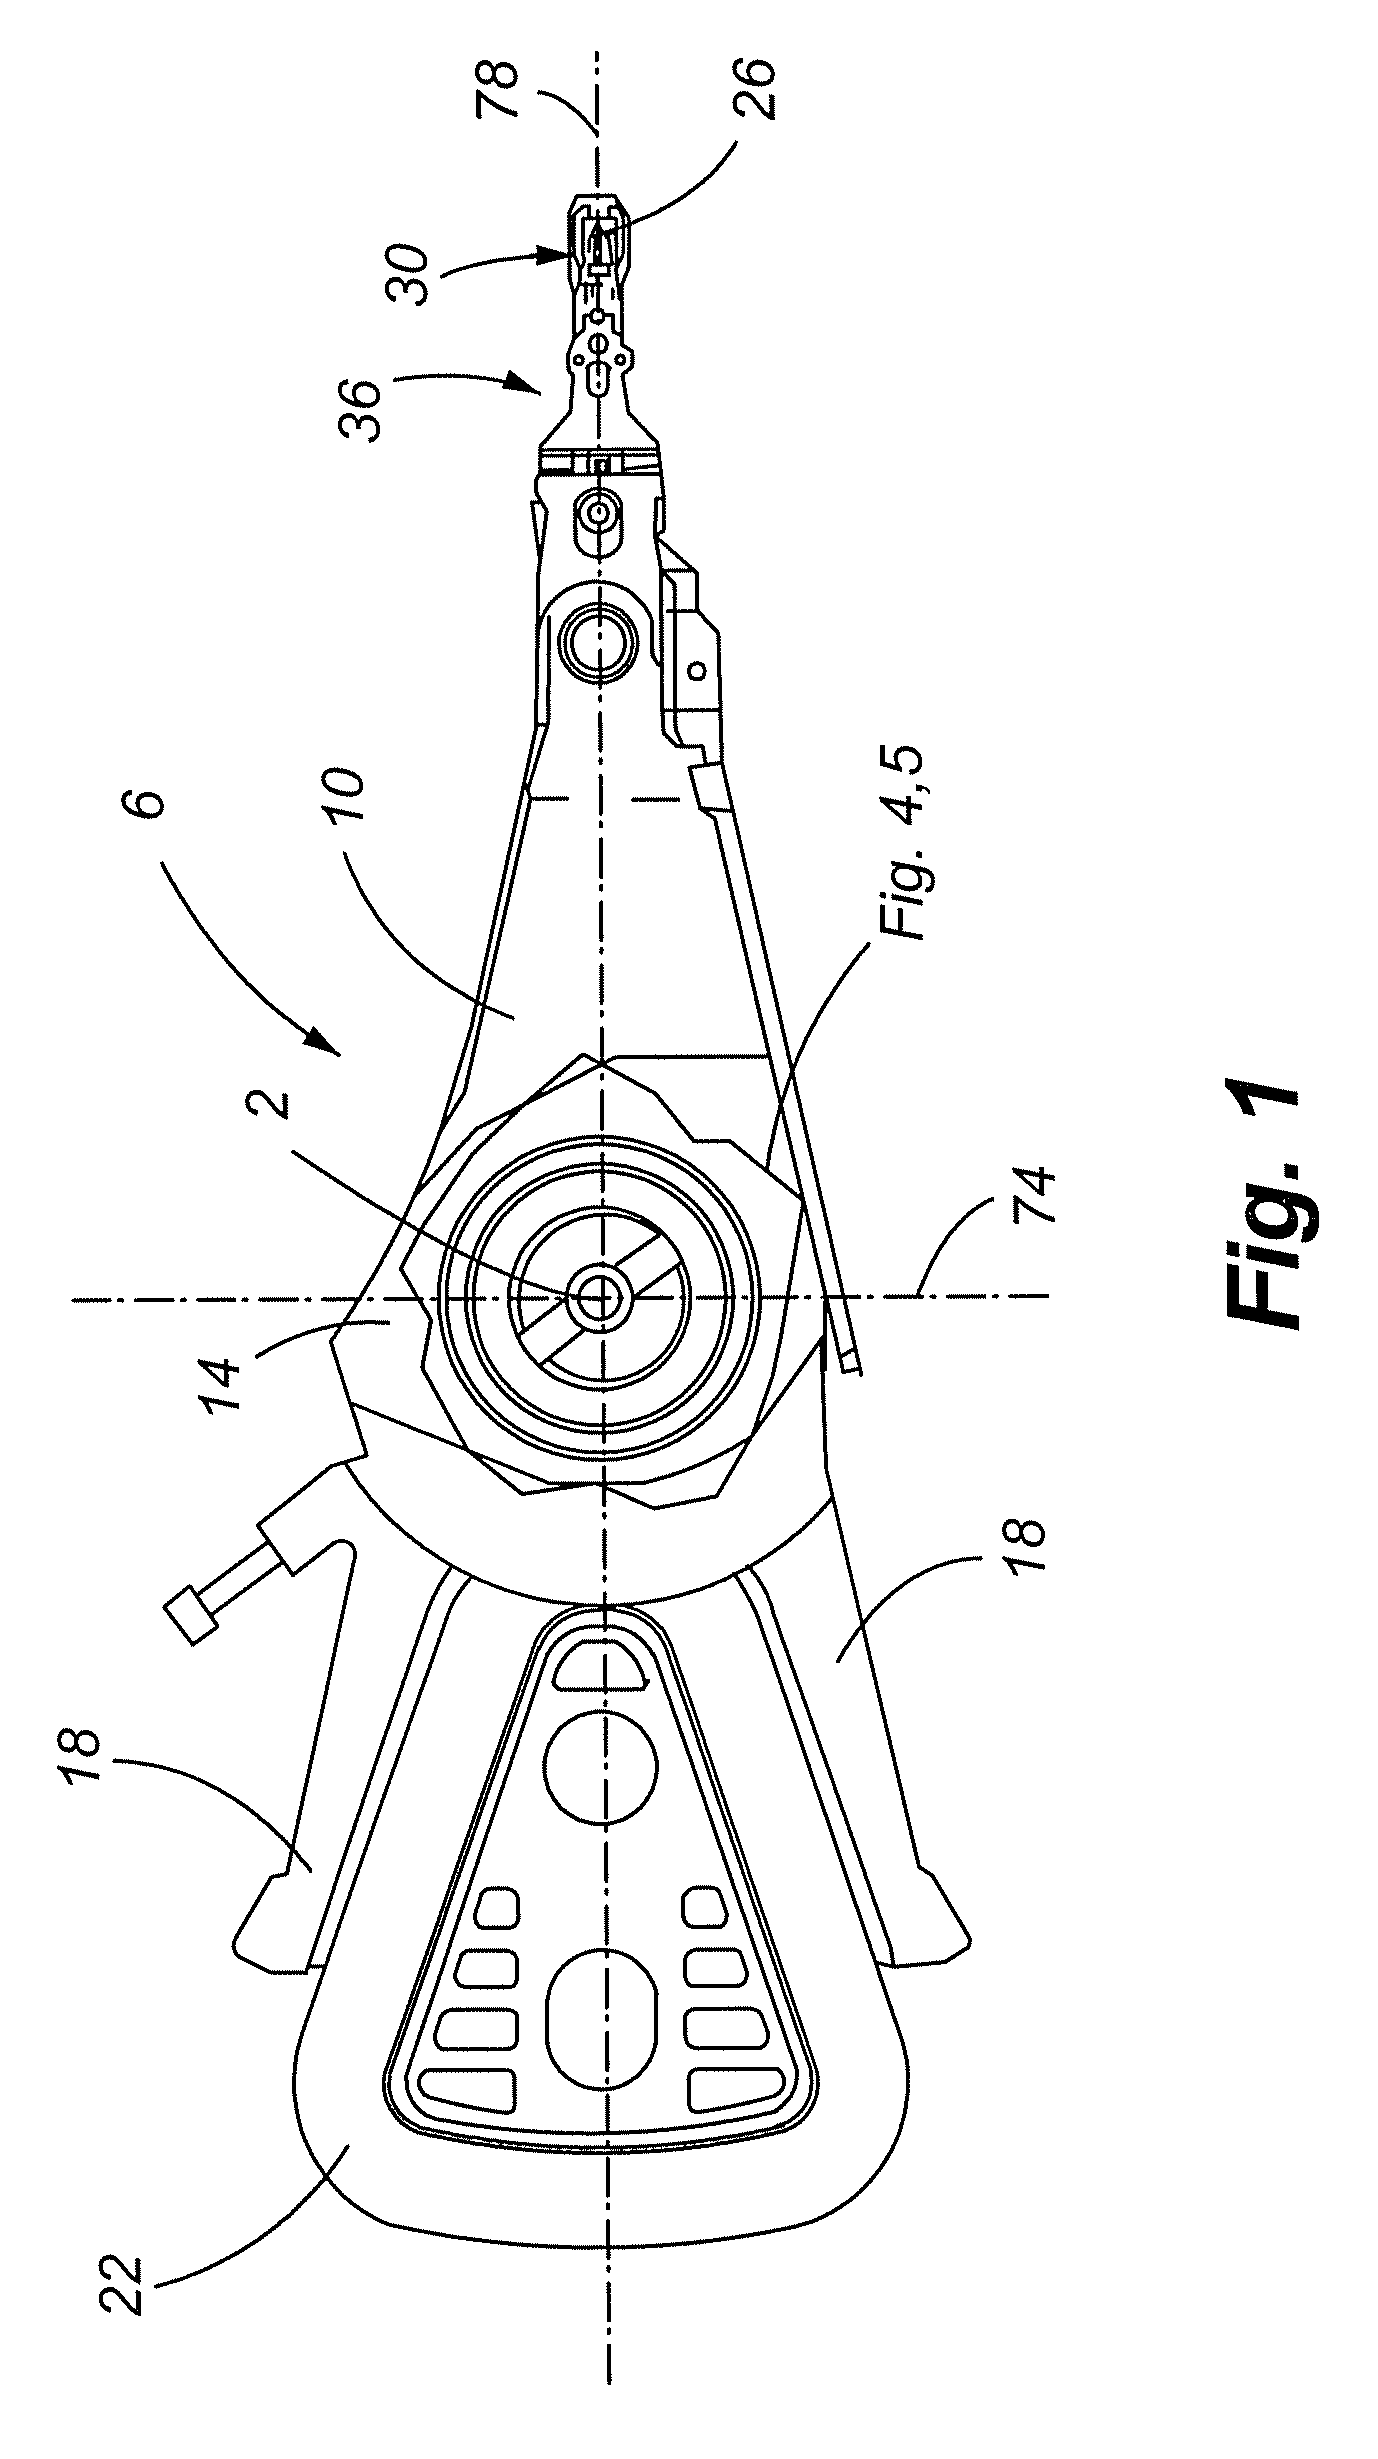 Asymmetric actuator bearing